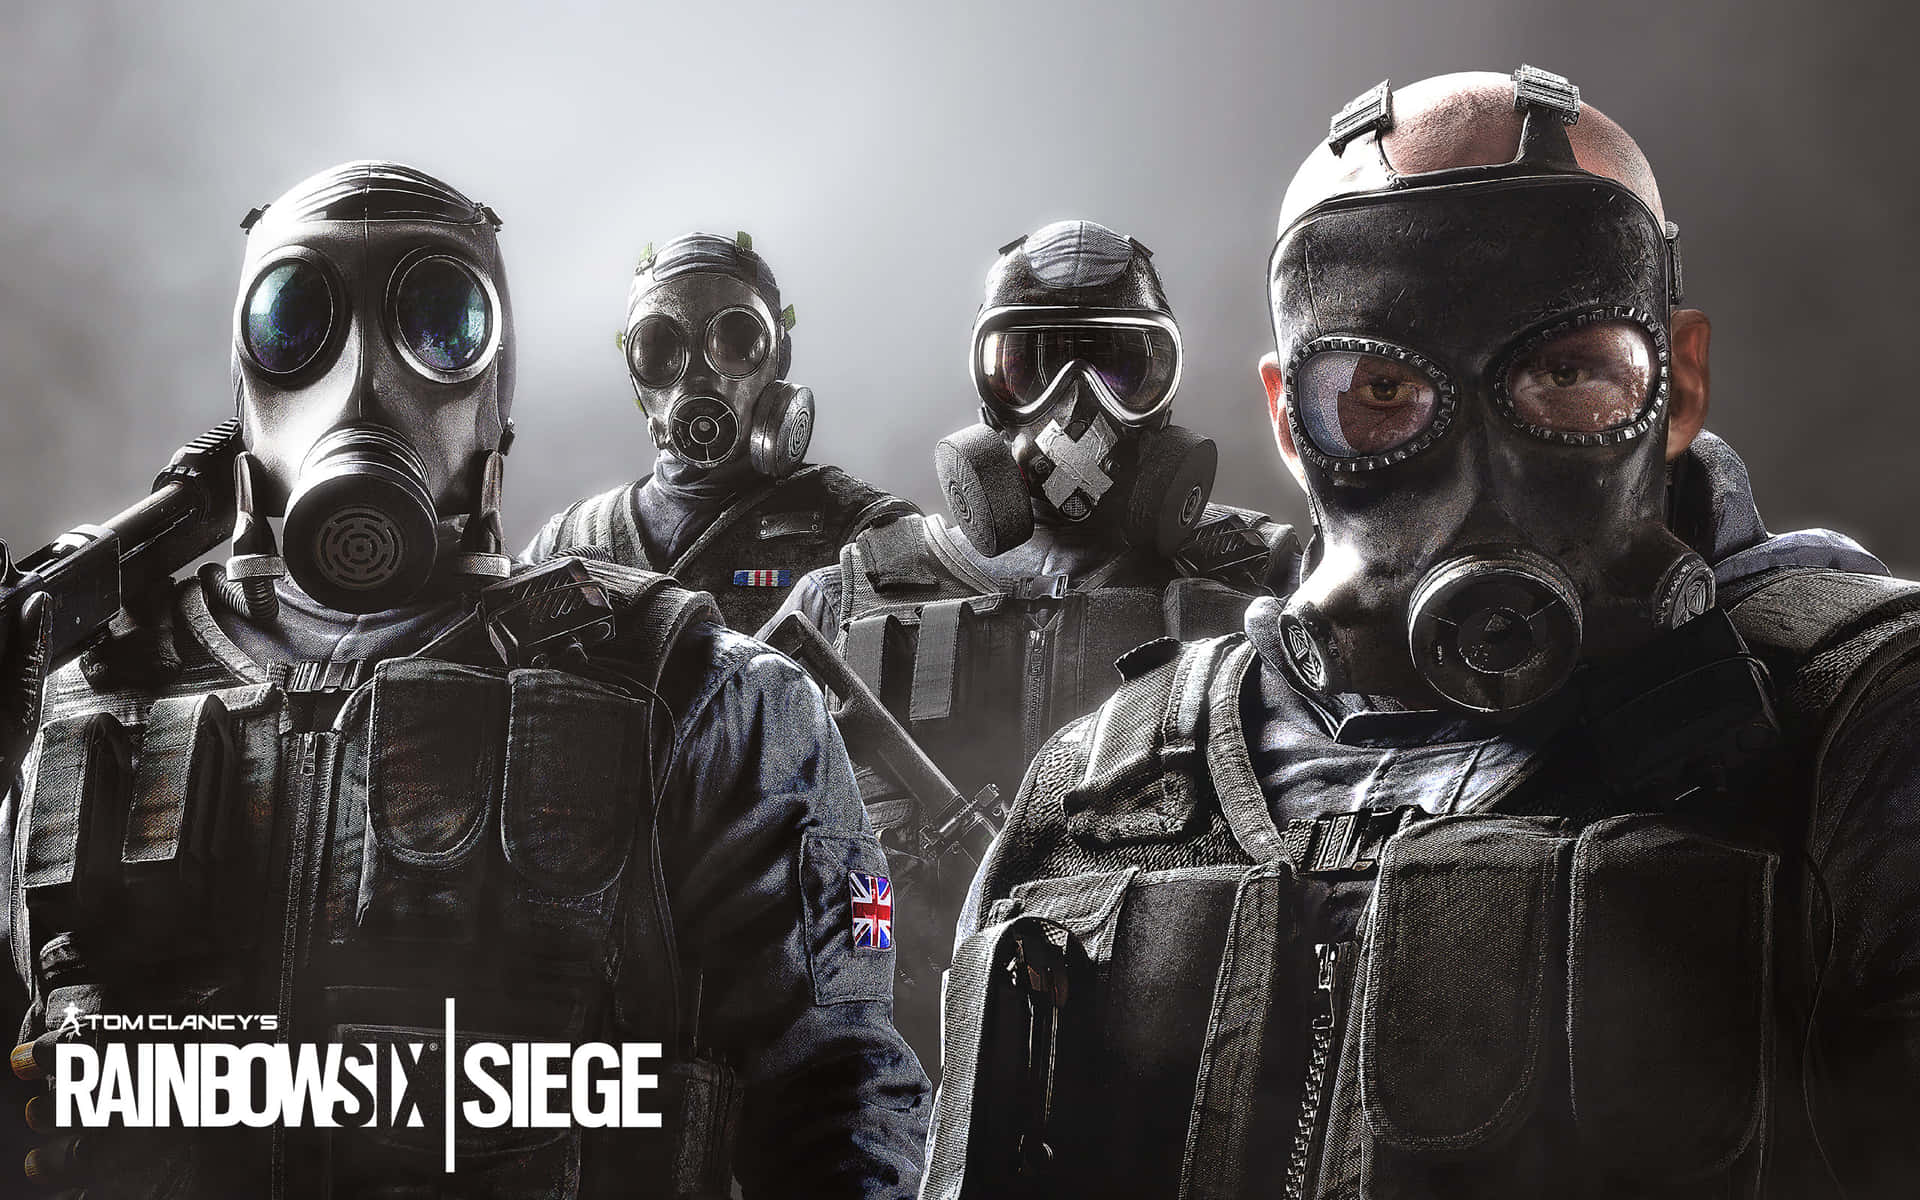 Elite Rainbow Six Siege Operators ready for action Wallpaper